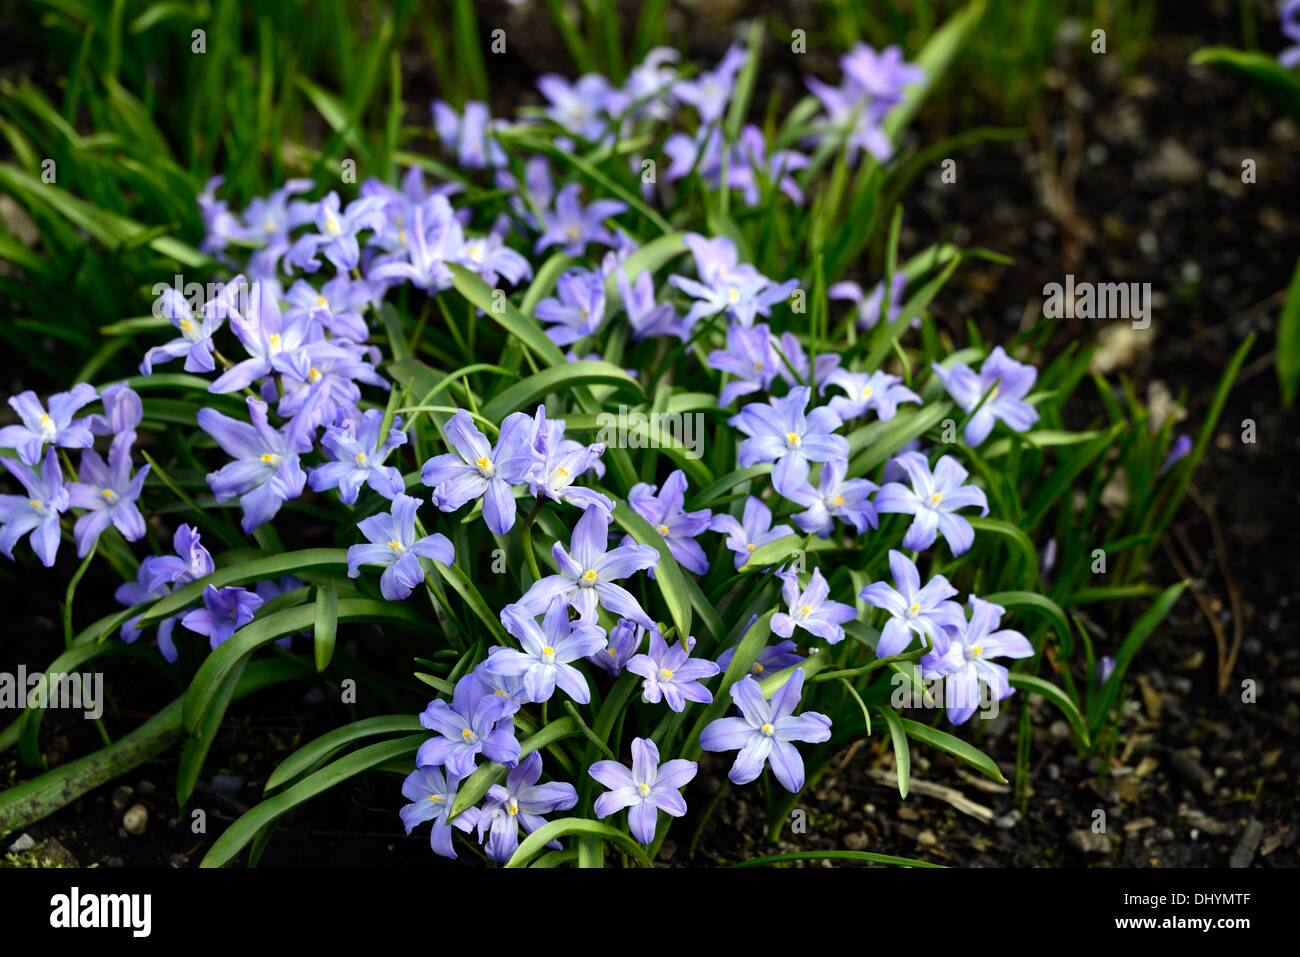 chionodoxa forbesii Glory of the snow flowers spring Scilla forbesii bloom blossom blue lilac flowers flowering bloom blossom Stock Photo